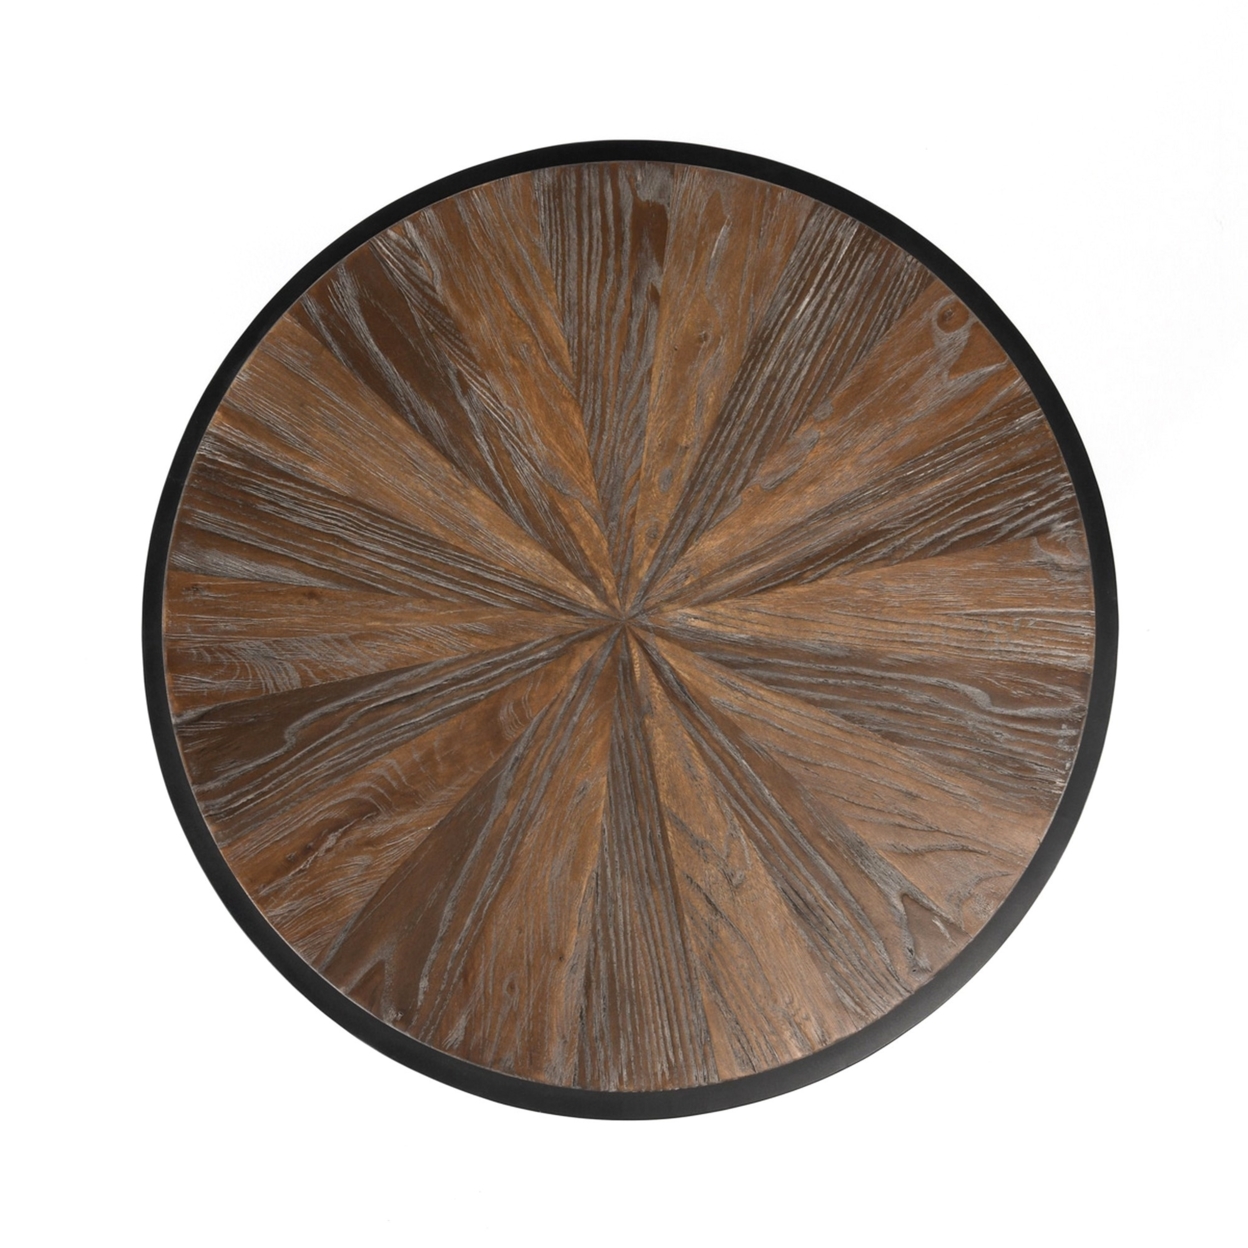 Jenny 24 Inch Round Drum Wood End Table, Metal Panels, Black, Brown- Saltoro Sherpi